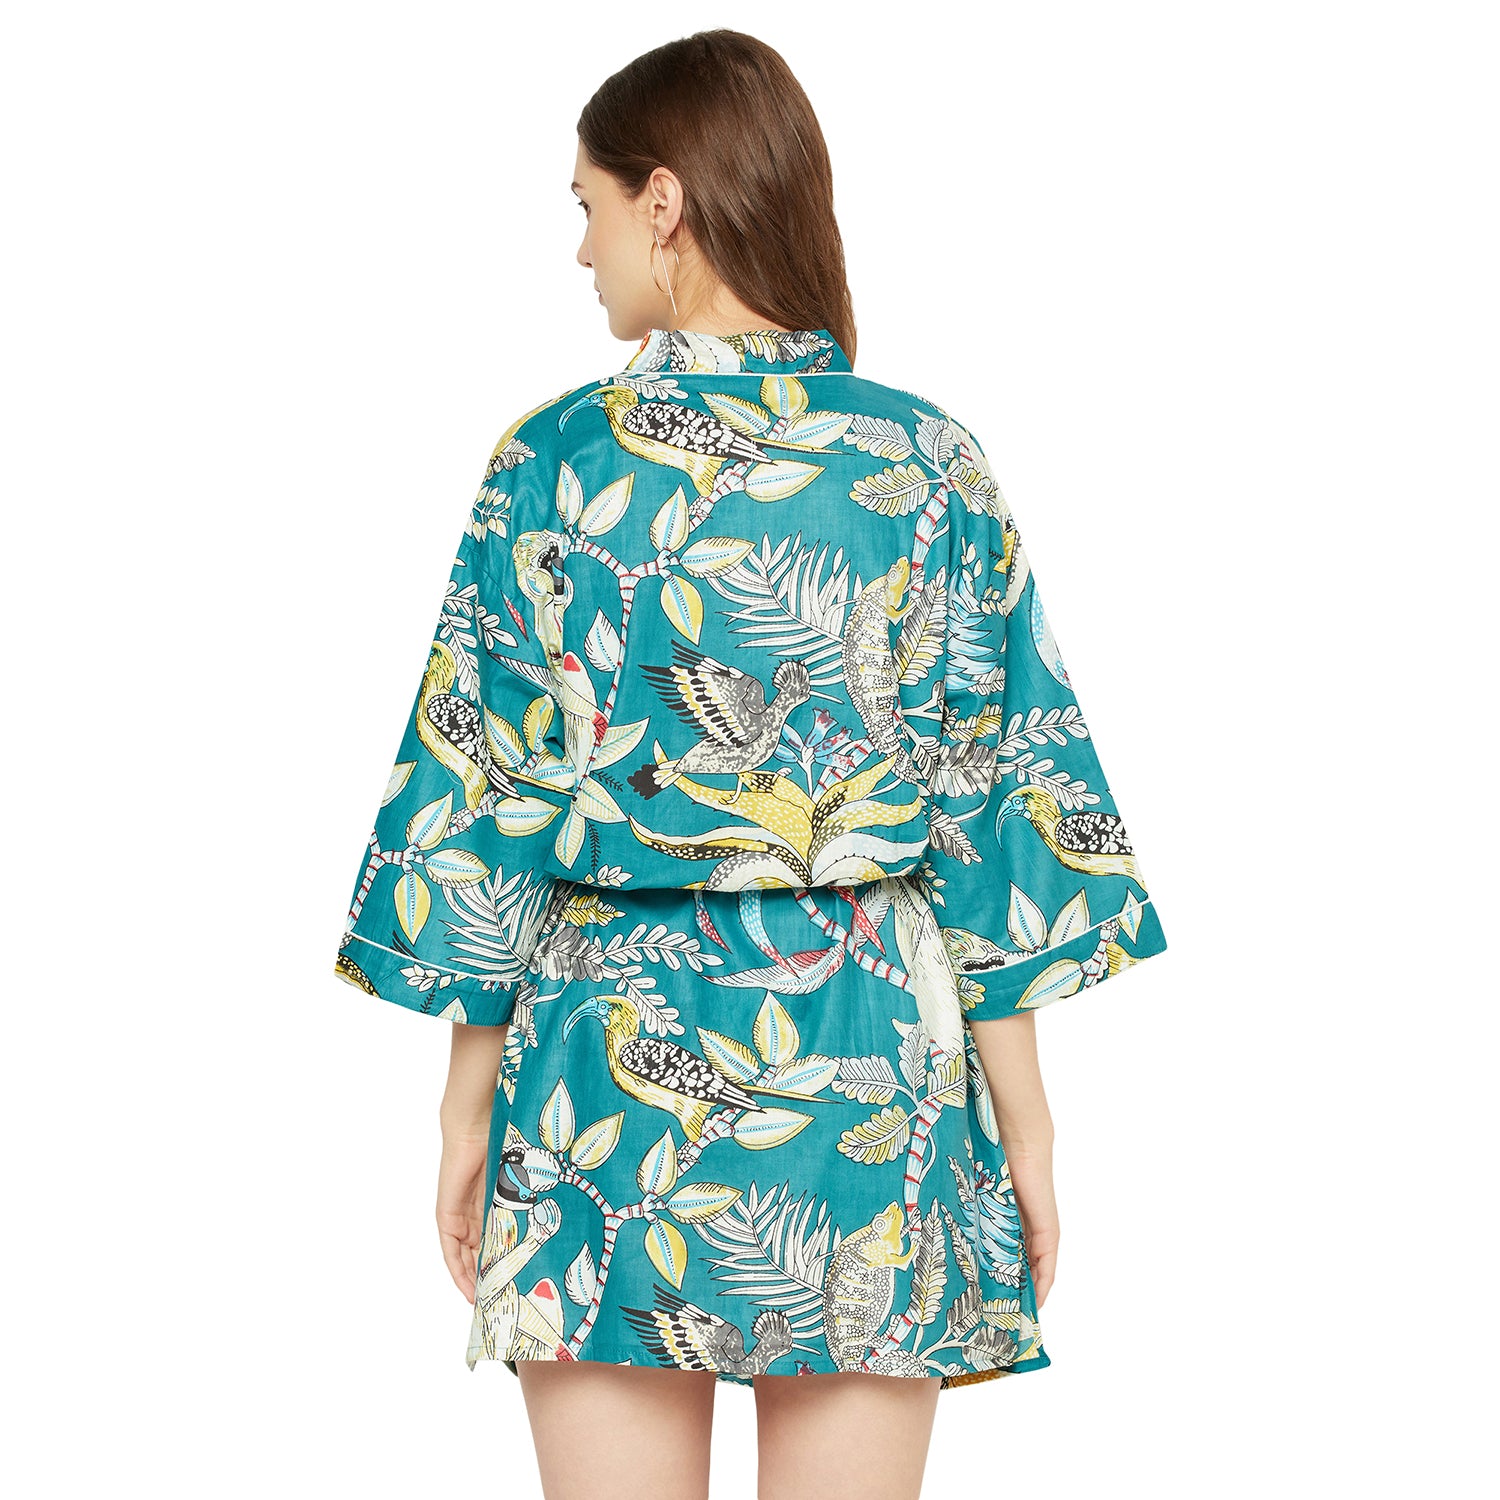 'Summer's Embrace' 100% Cotton Kimono Robe